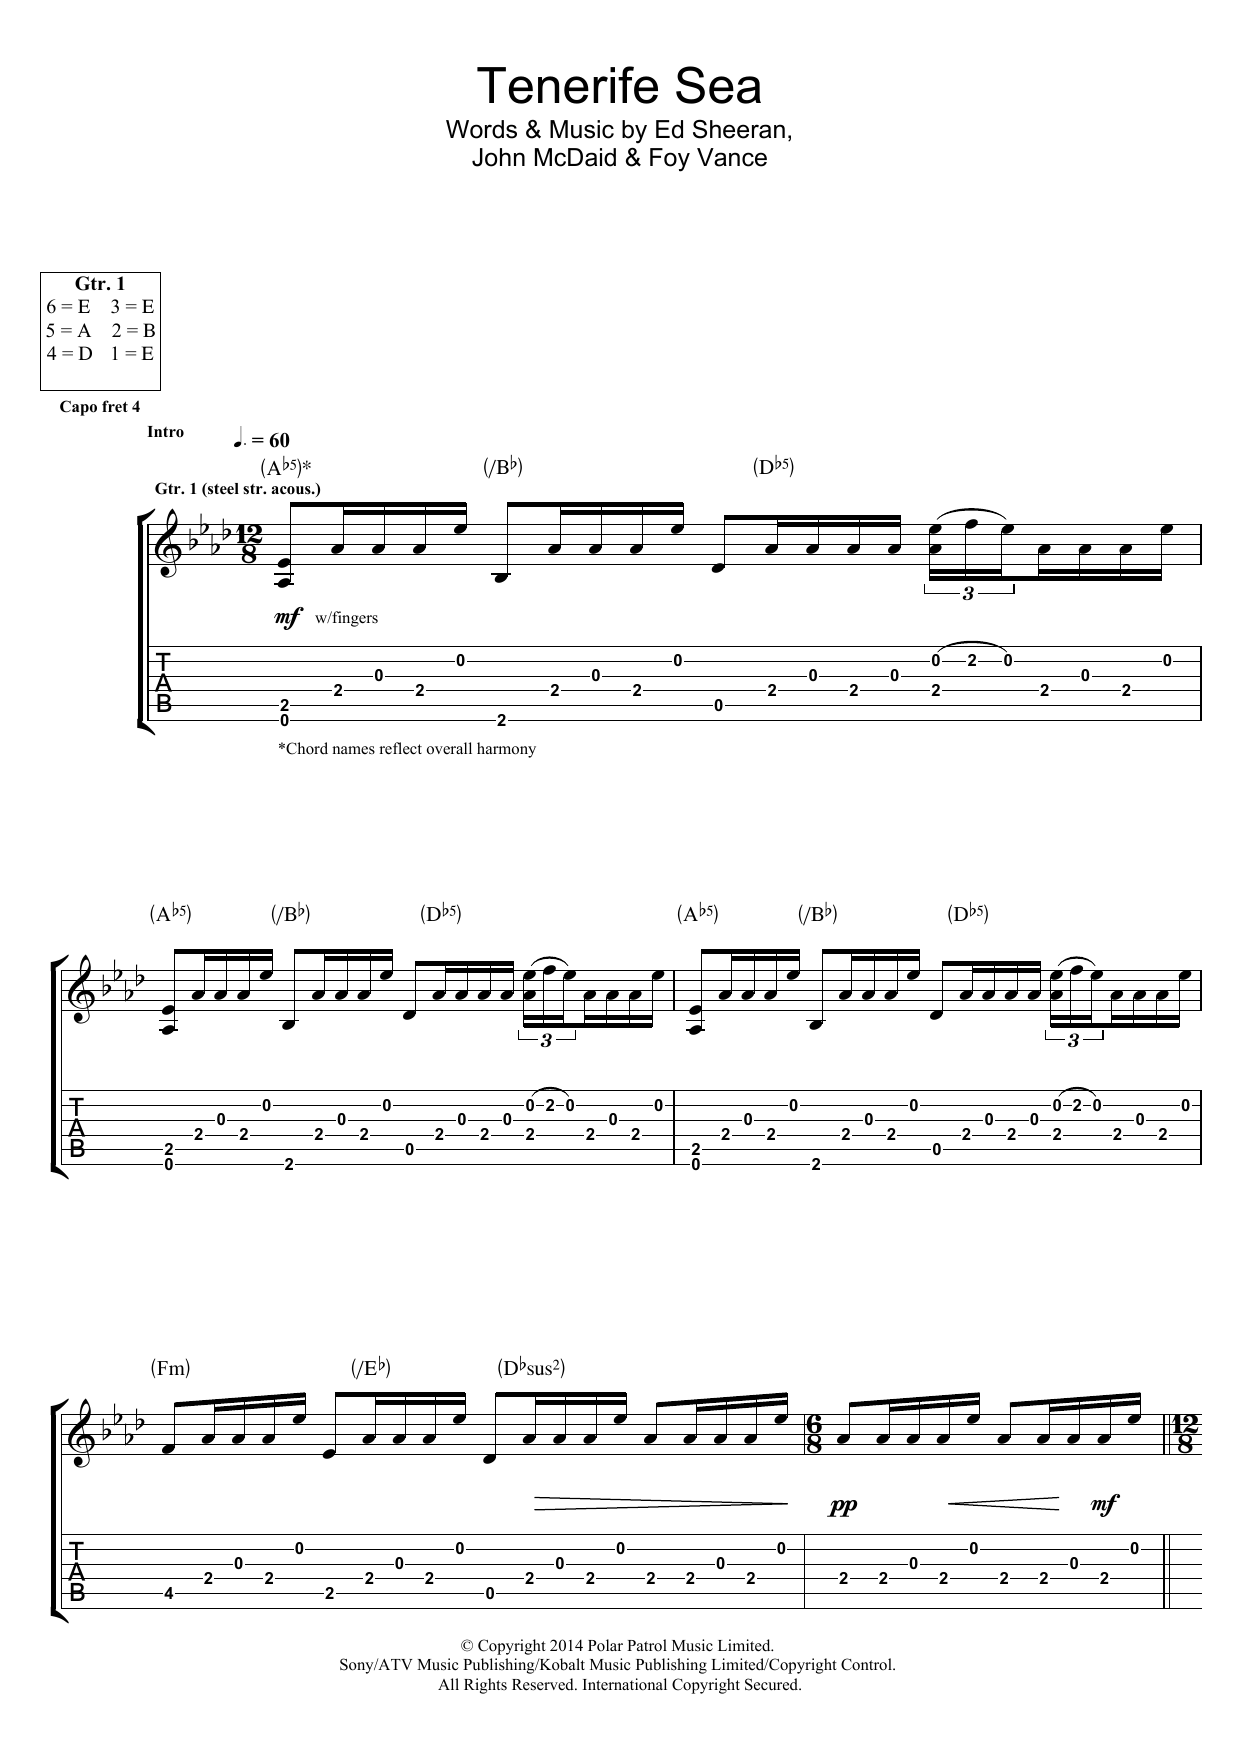 Ed Sheeran Tenerife Sea Sheet Music Notes & Chords for Guitar Tab - Download or Print PDF